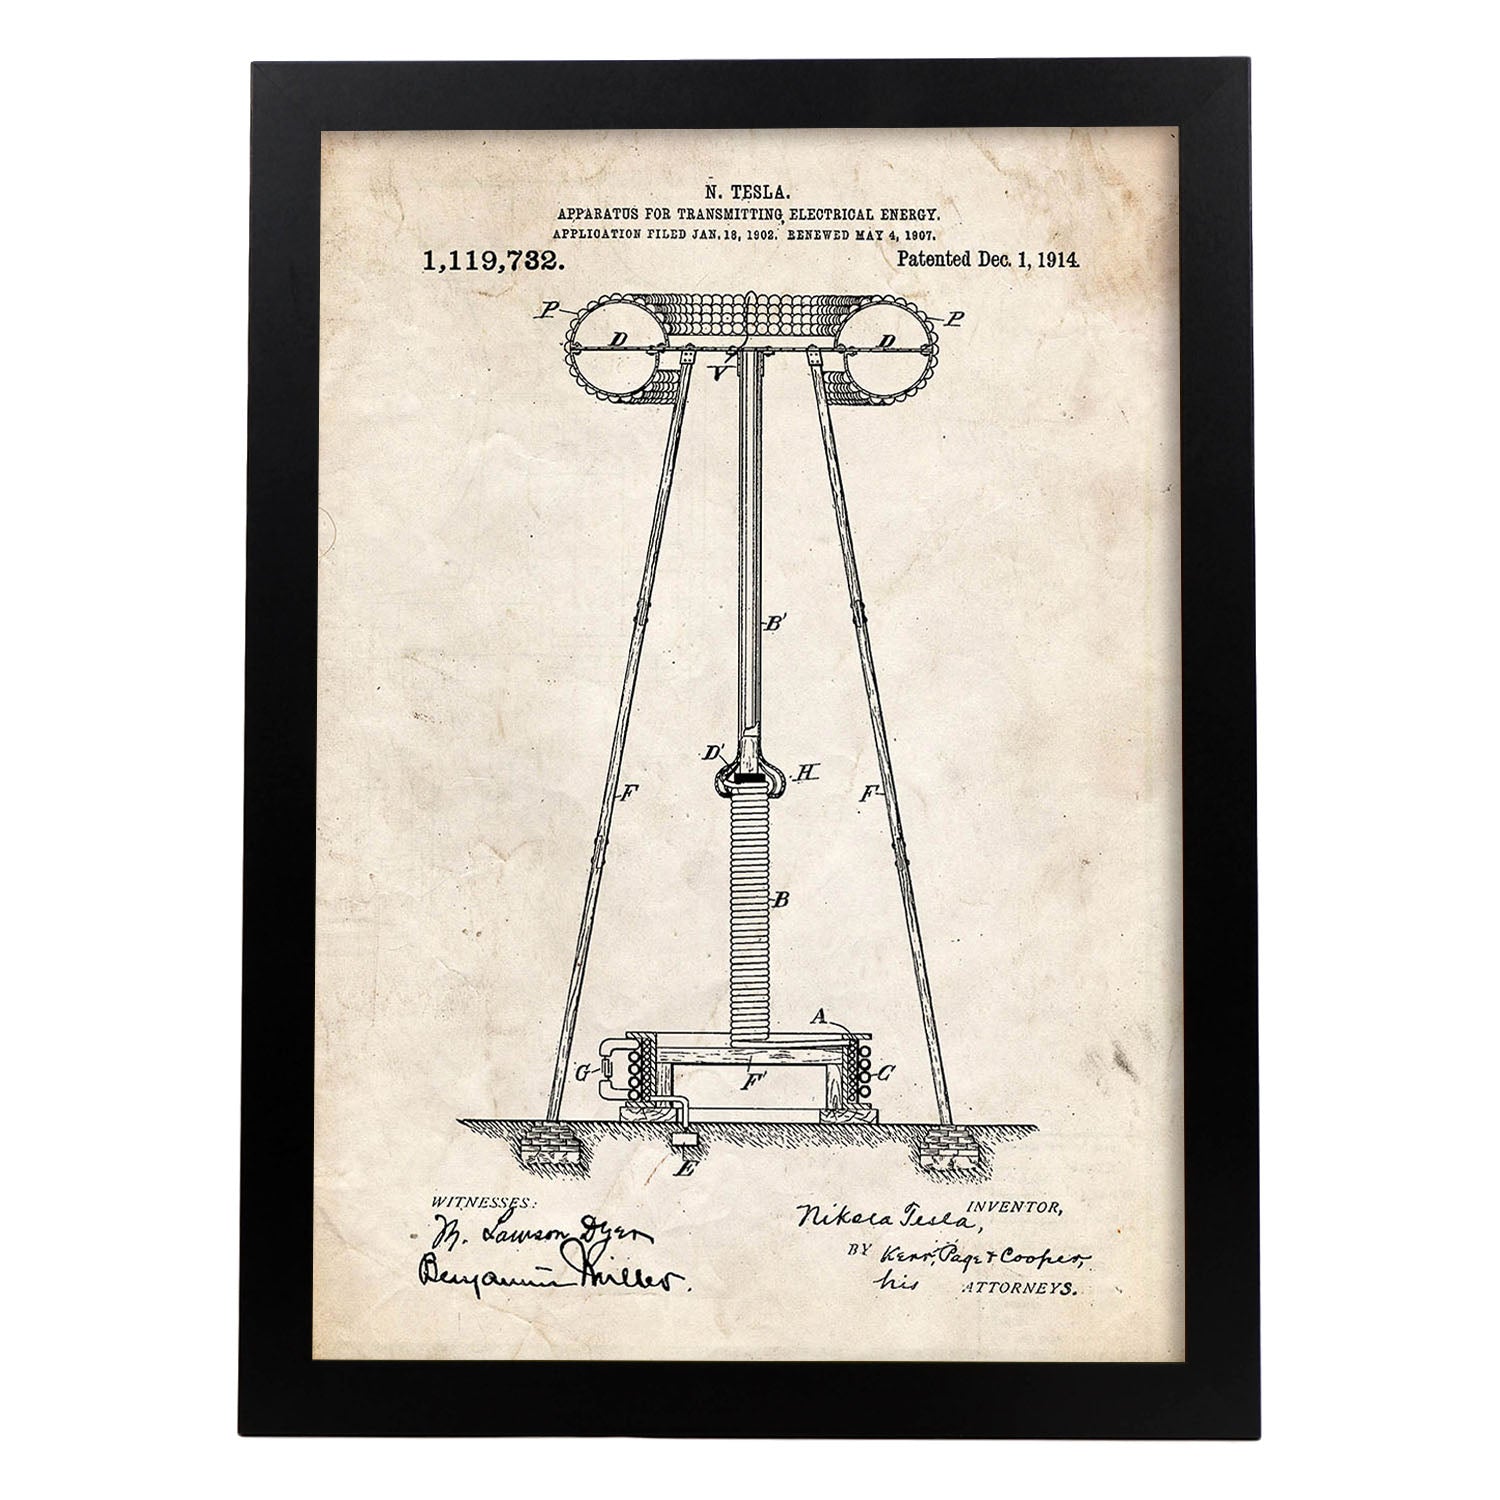 Poster con patente de Aparato de transmision de energia 2. Lámina con diseño de patente antigua.-Artwork-Nacnic-A4-Marco Negro-Nacnic Estudio SL